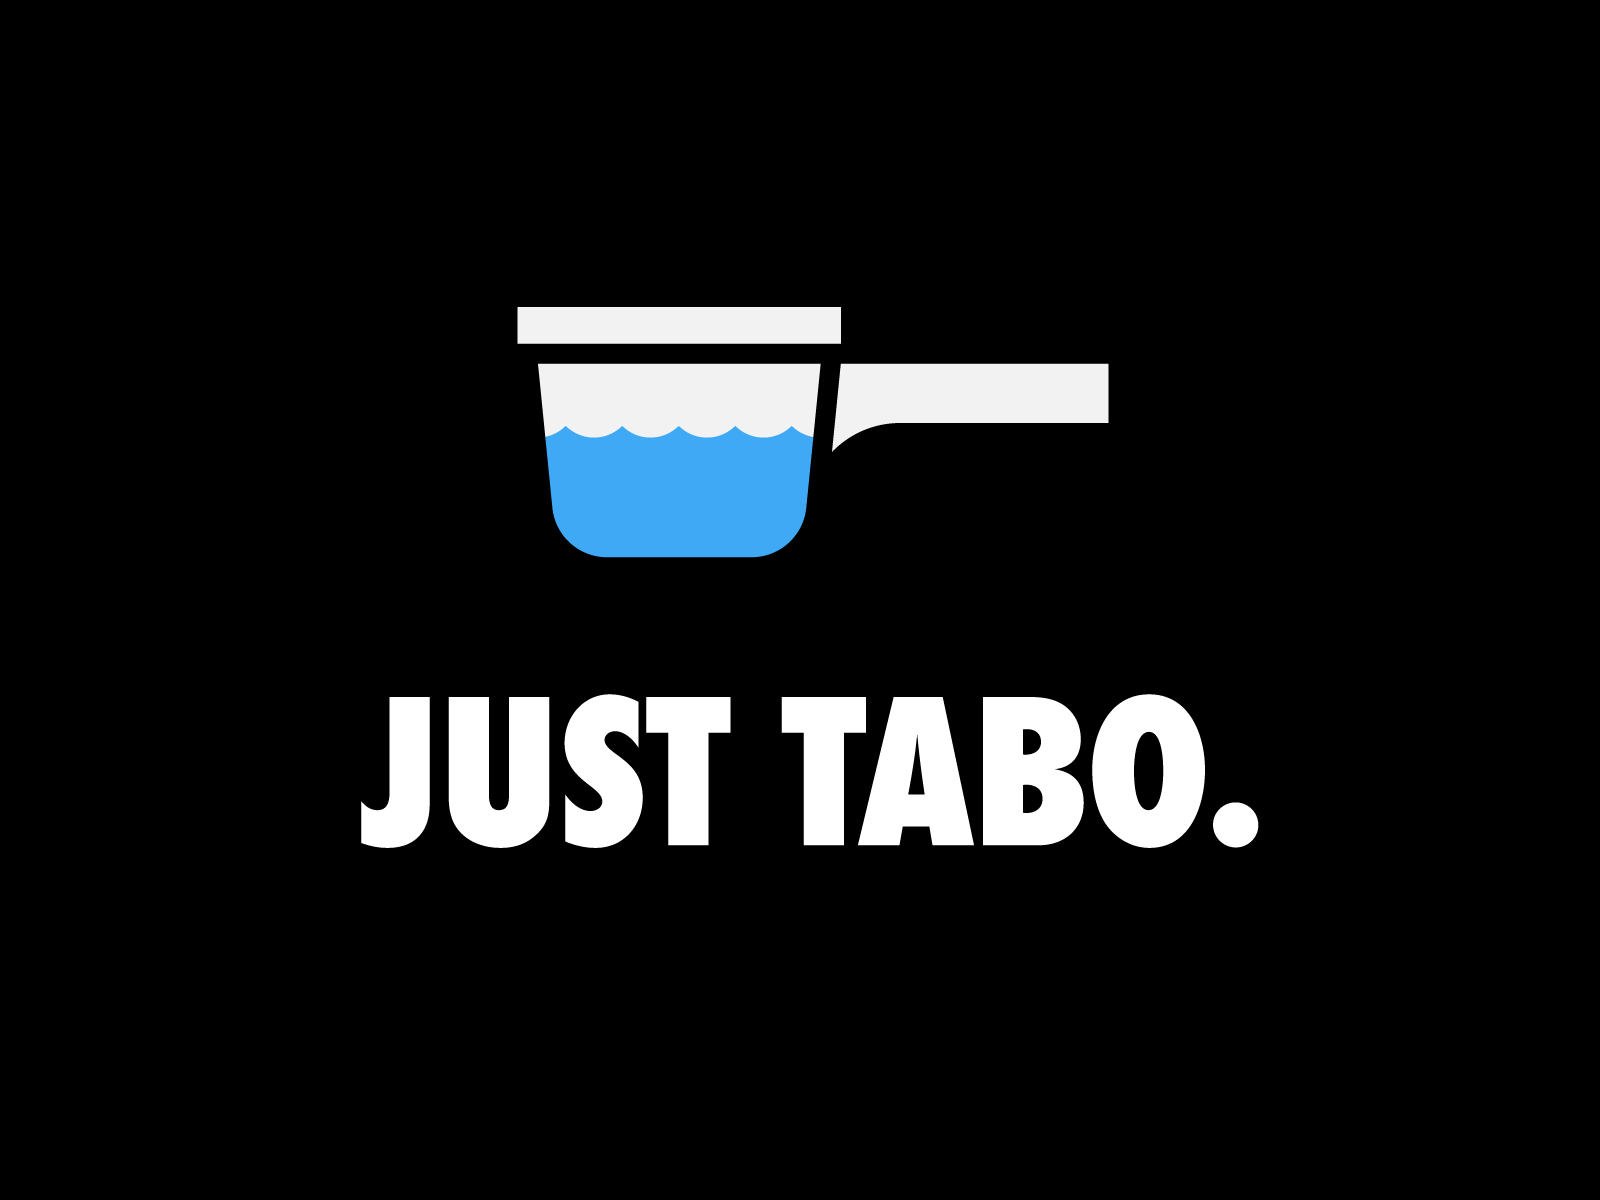 Just Tabo by Neeko David on Dribbble